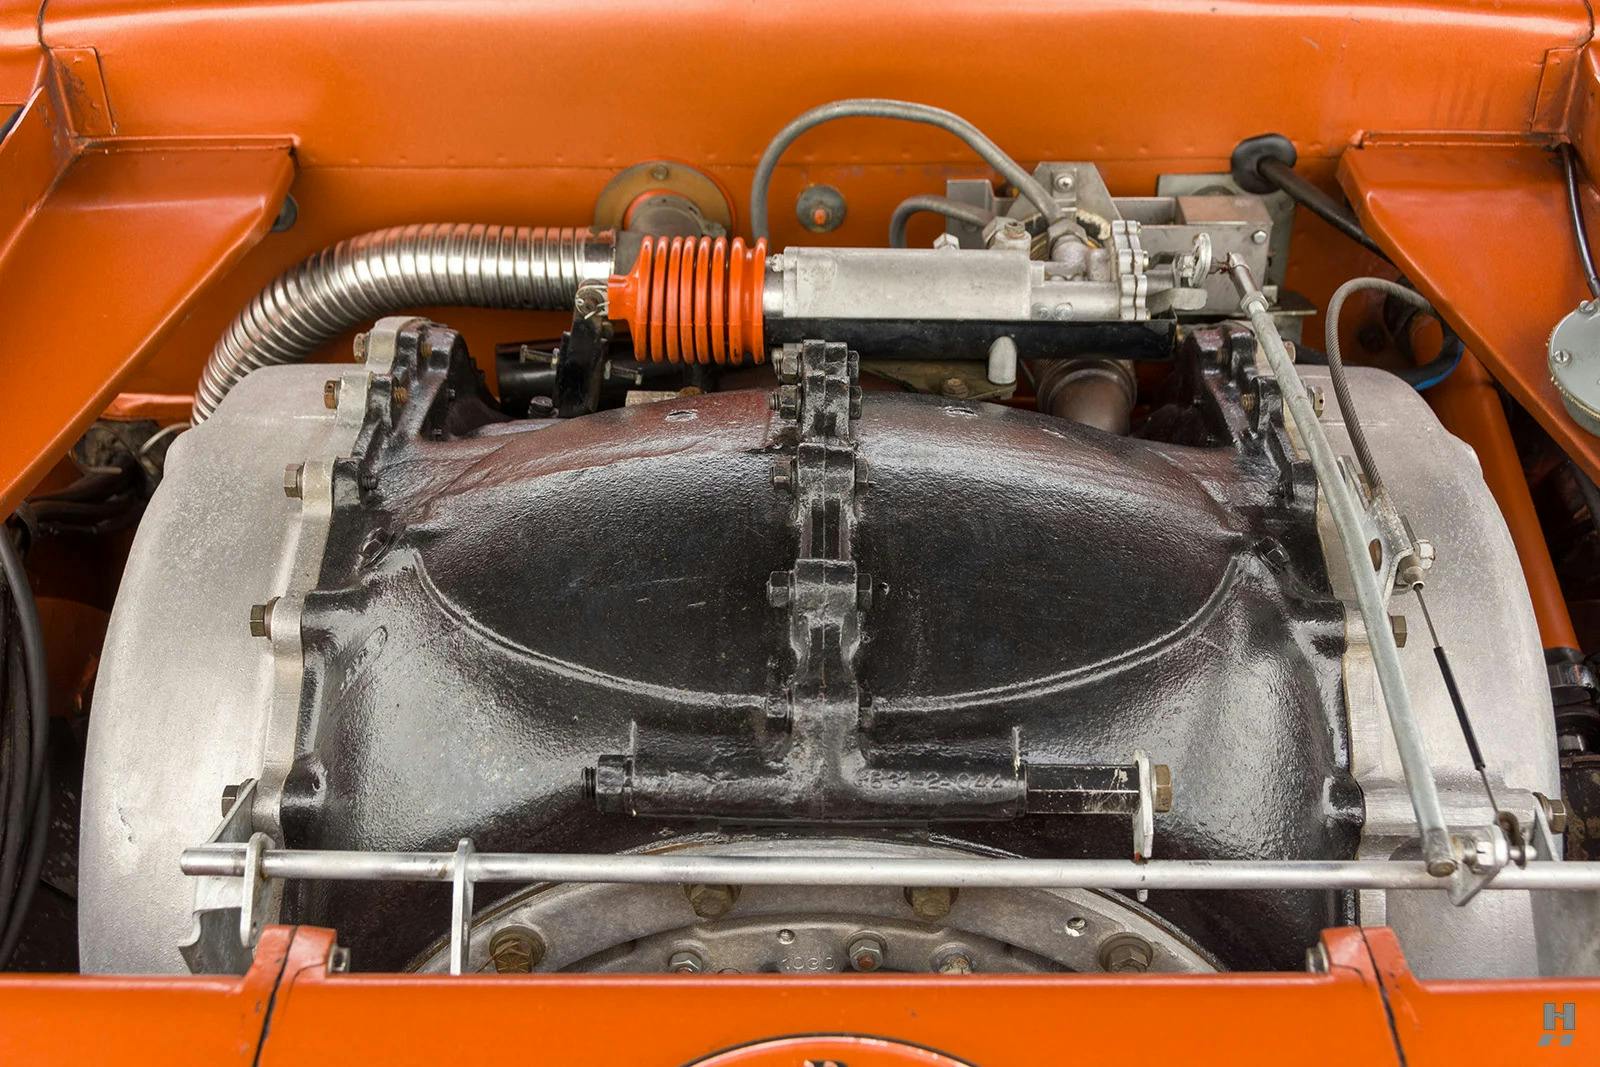 1963 Chrysler Turbine Car engine close